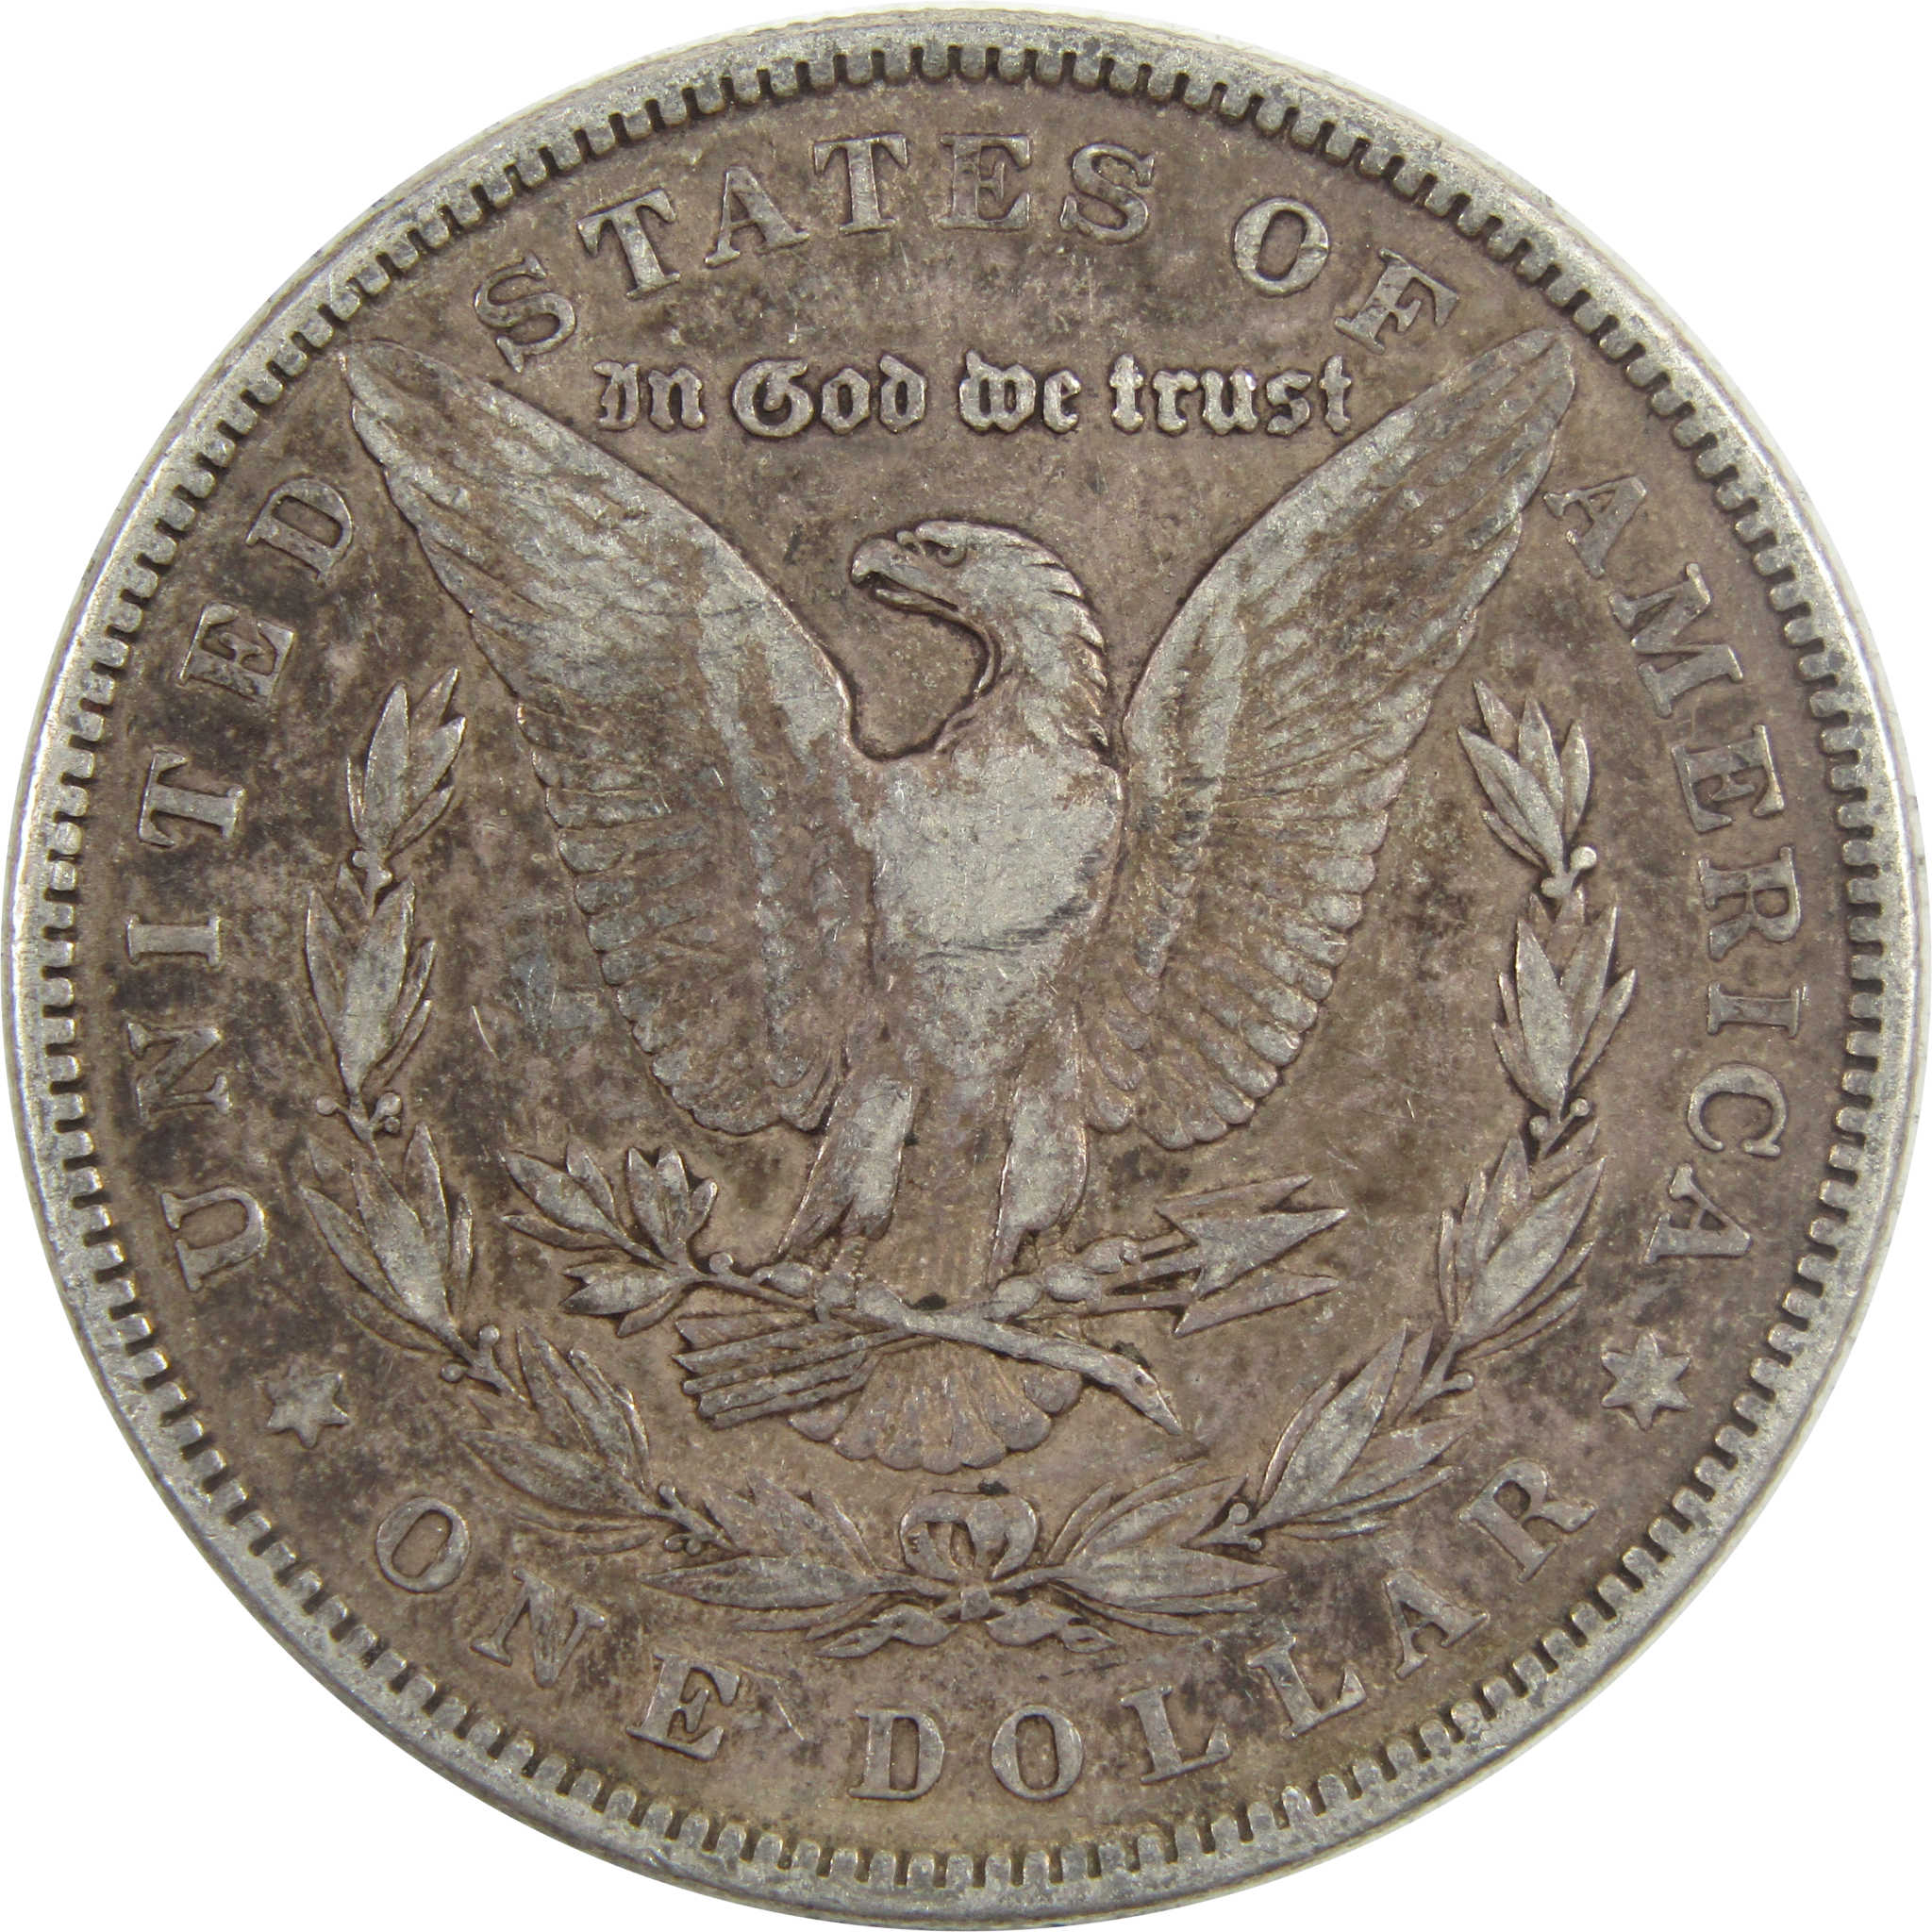 1883 Morgan Dollar VF Very Fine 90% Silver $1 Coin SKU:I5584 - Morgan coin - Morgan silver dollar - Morgan silver dollar for sale - Profile Coins &amp; Collectibles